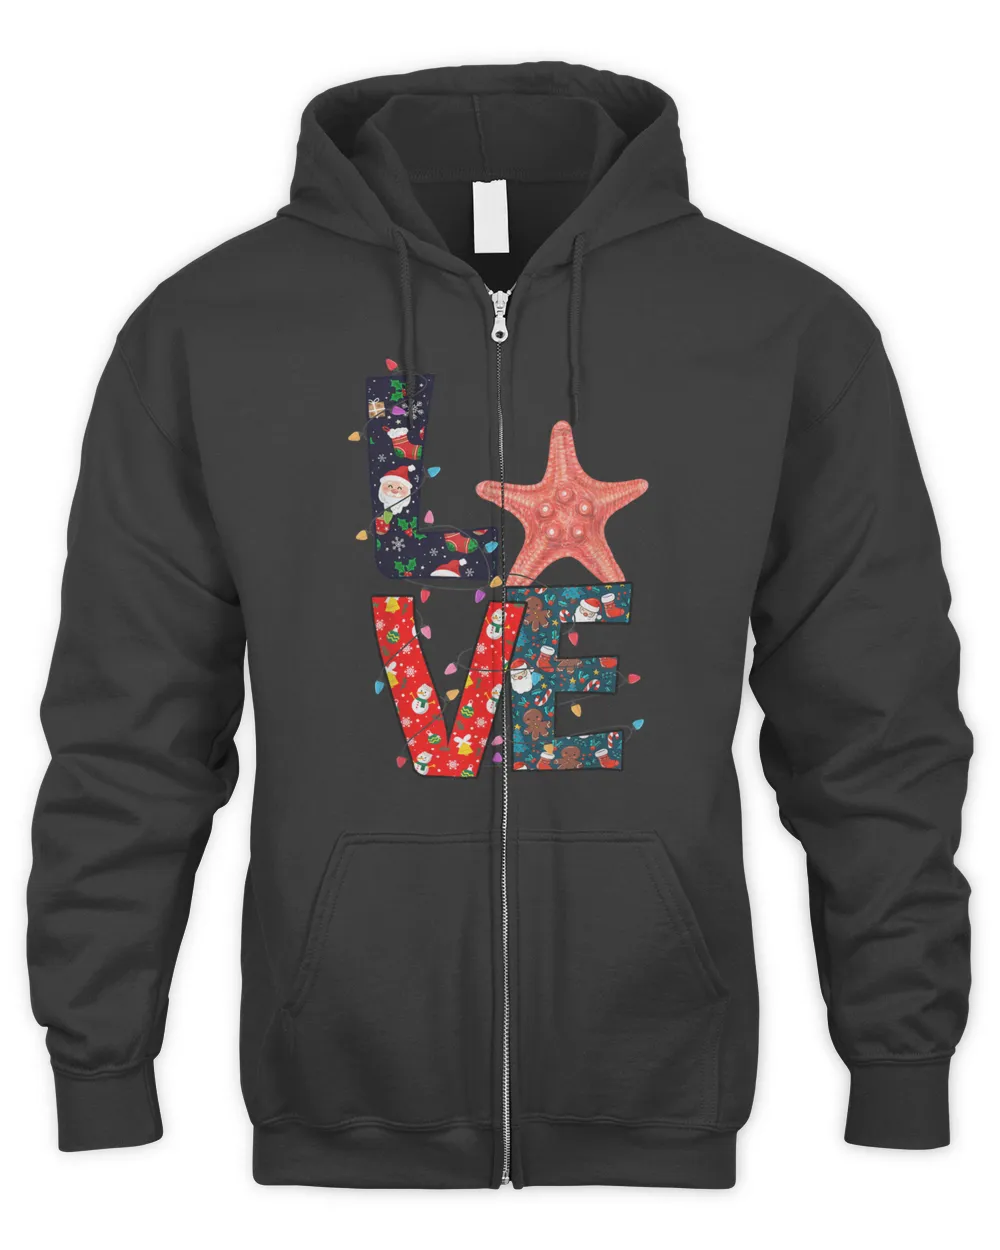 Starfish Lover Xmas Ornament Decor Ugly Christmas Sweater